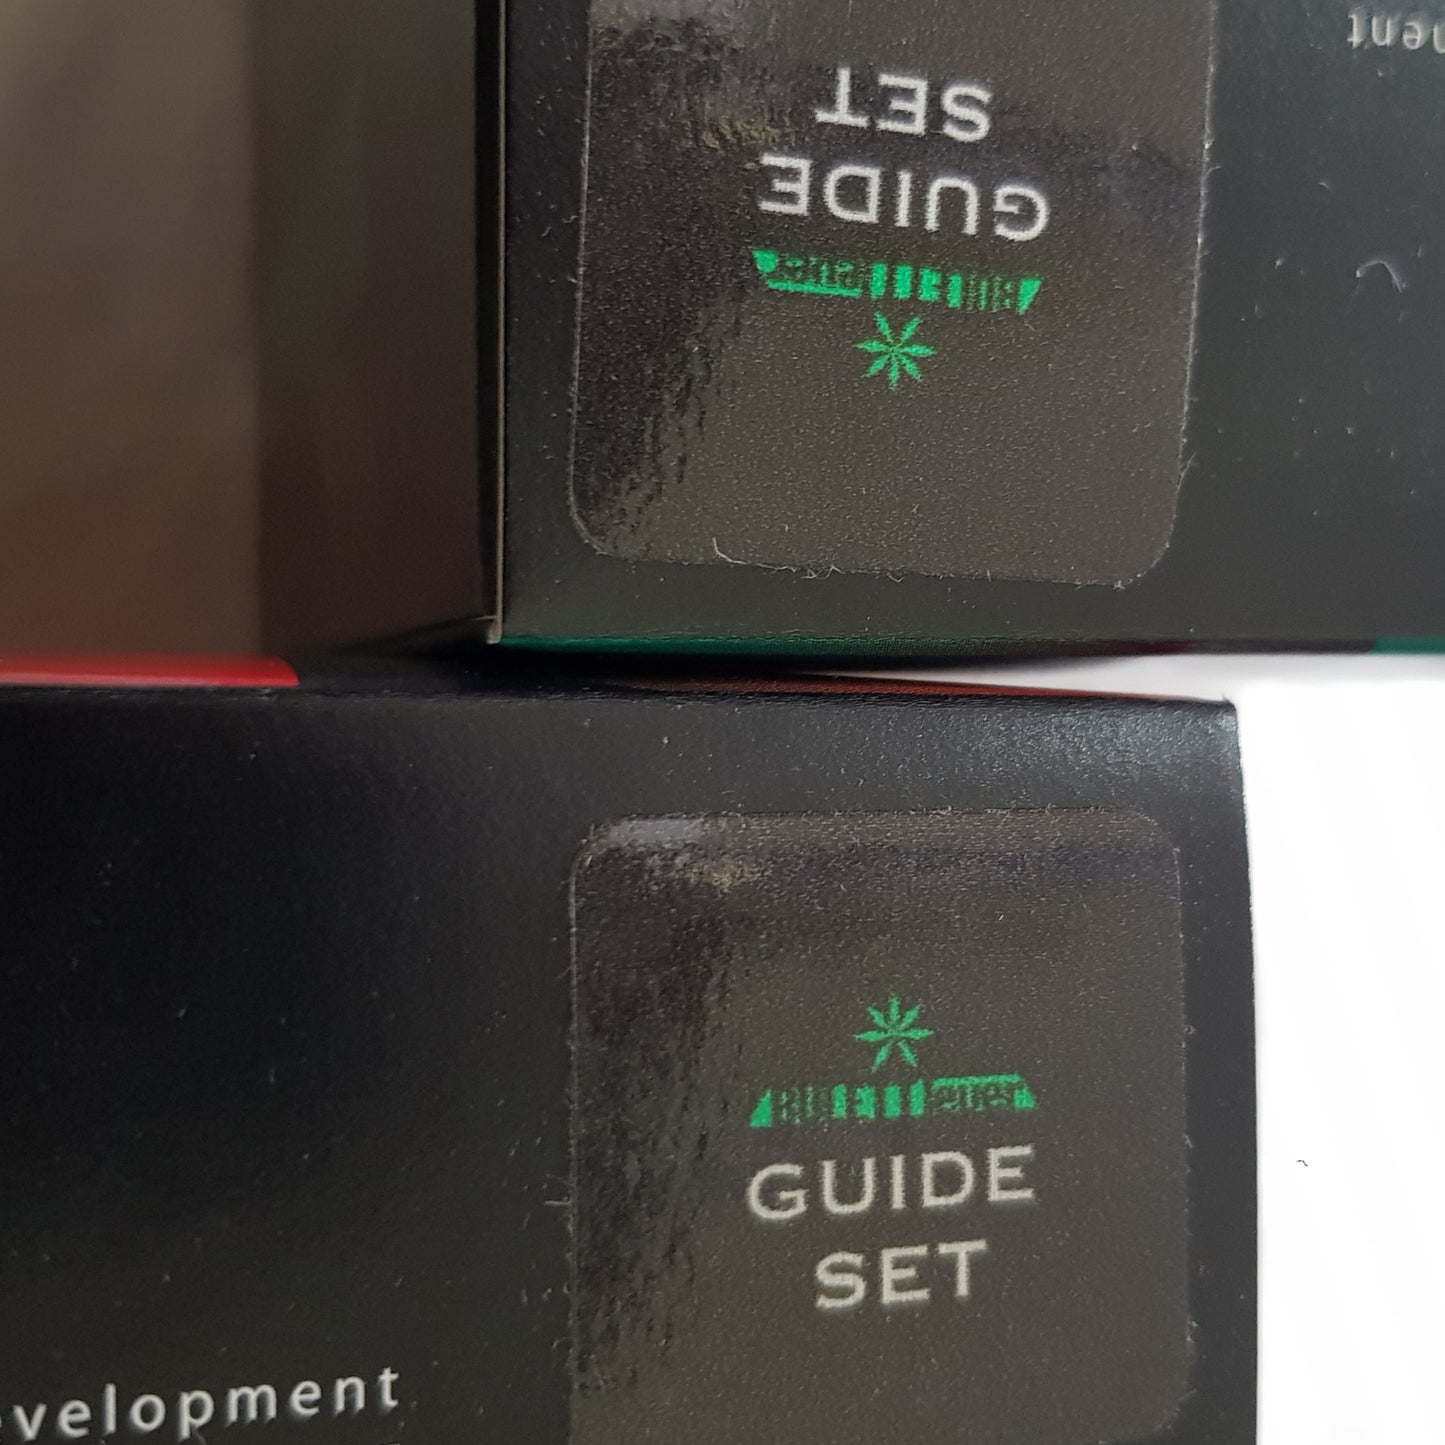 Seimitsu LSX-NOBI-01-PRO Joystick (+STD guide kit)